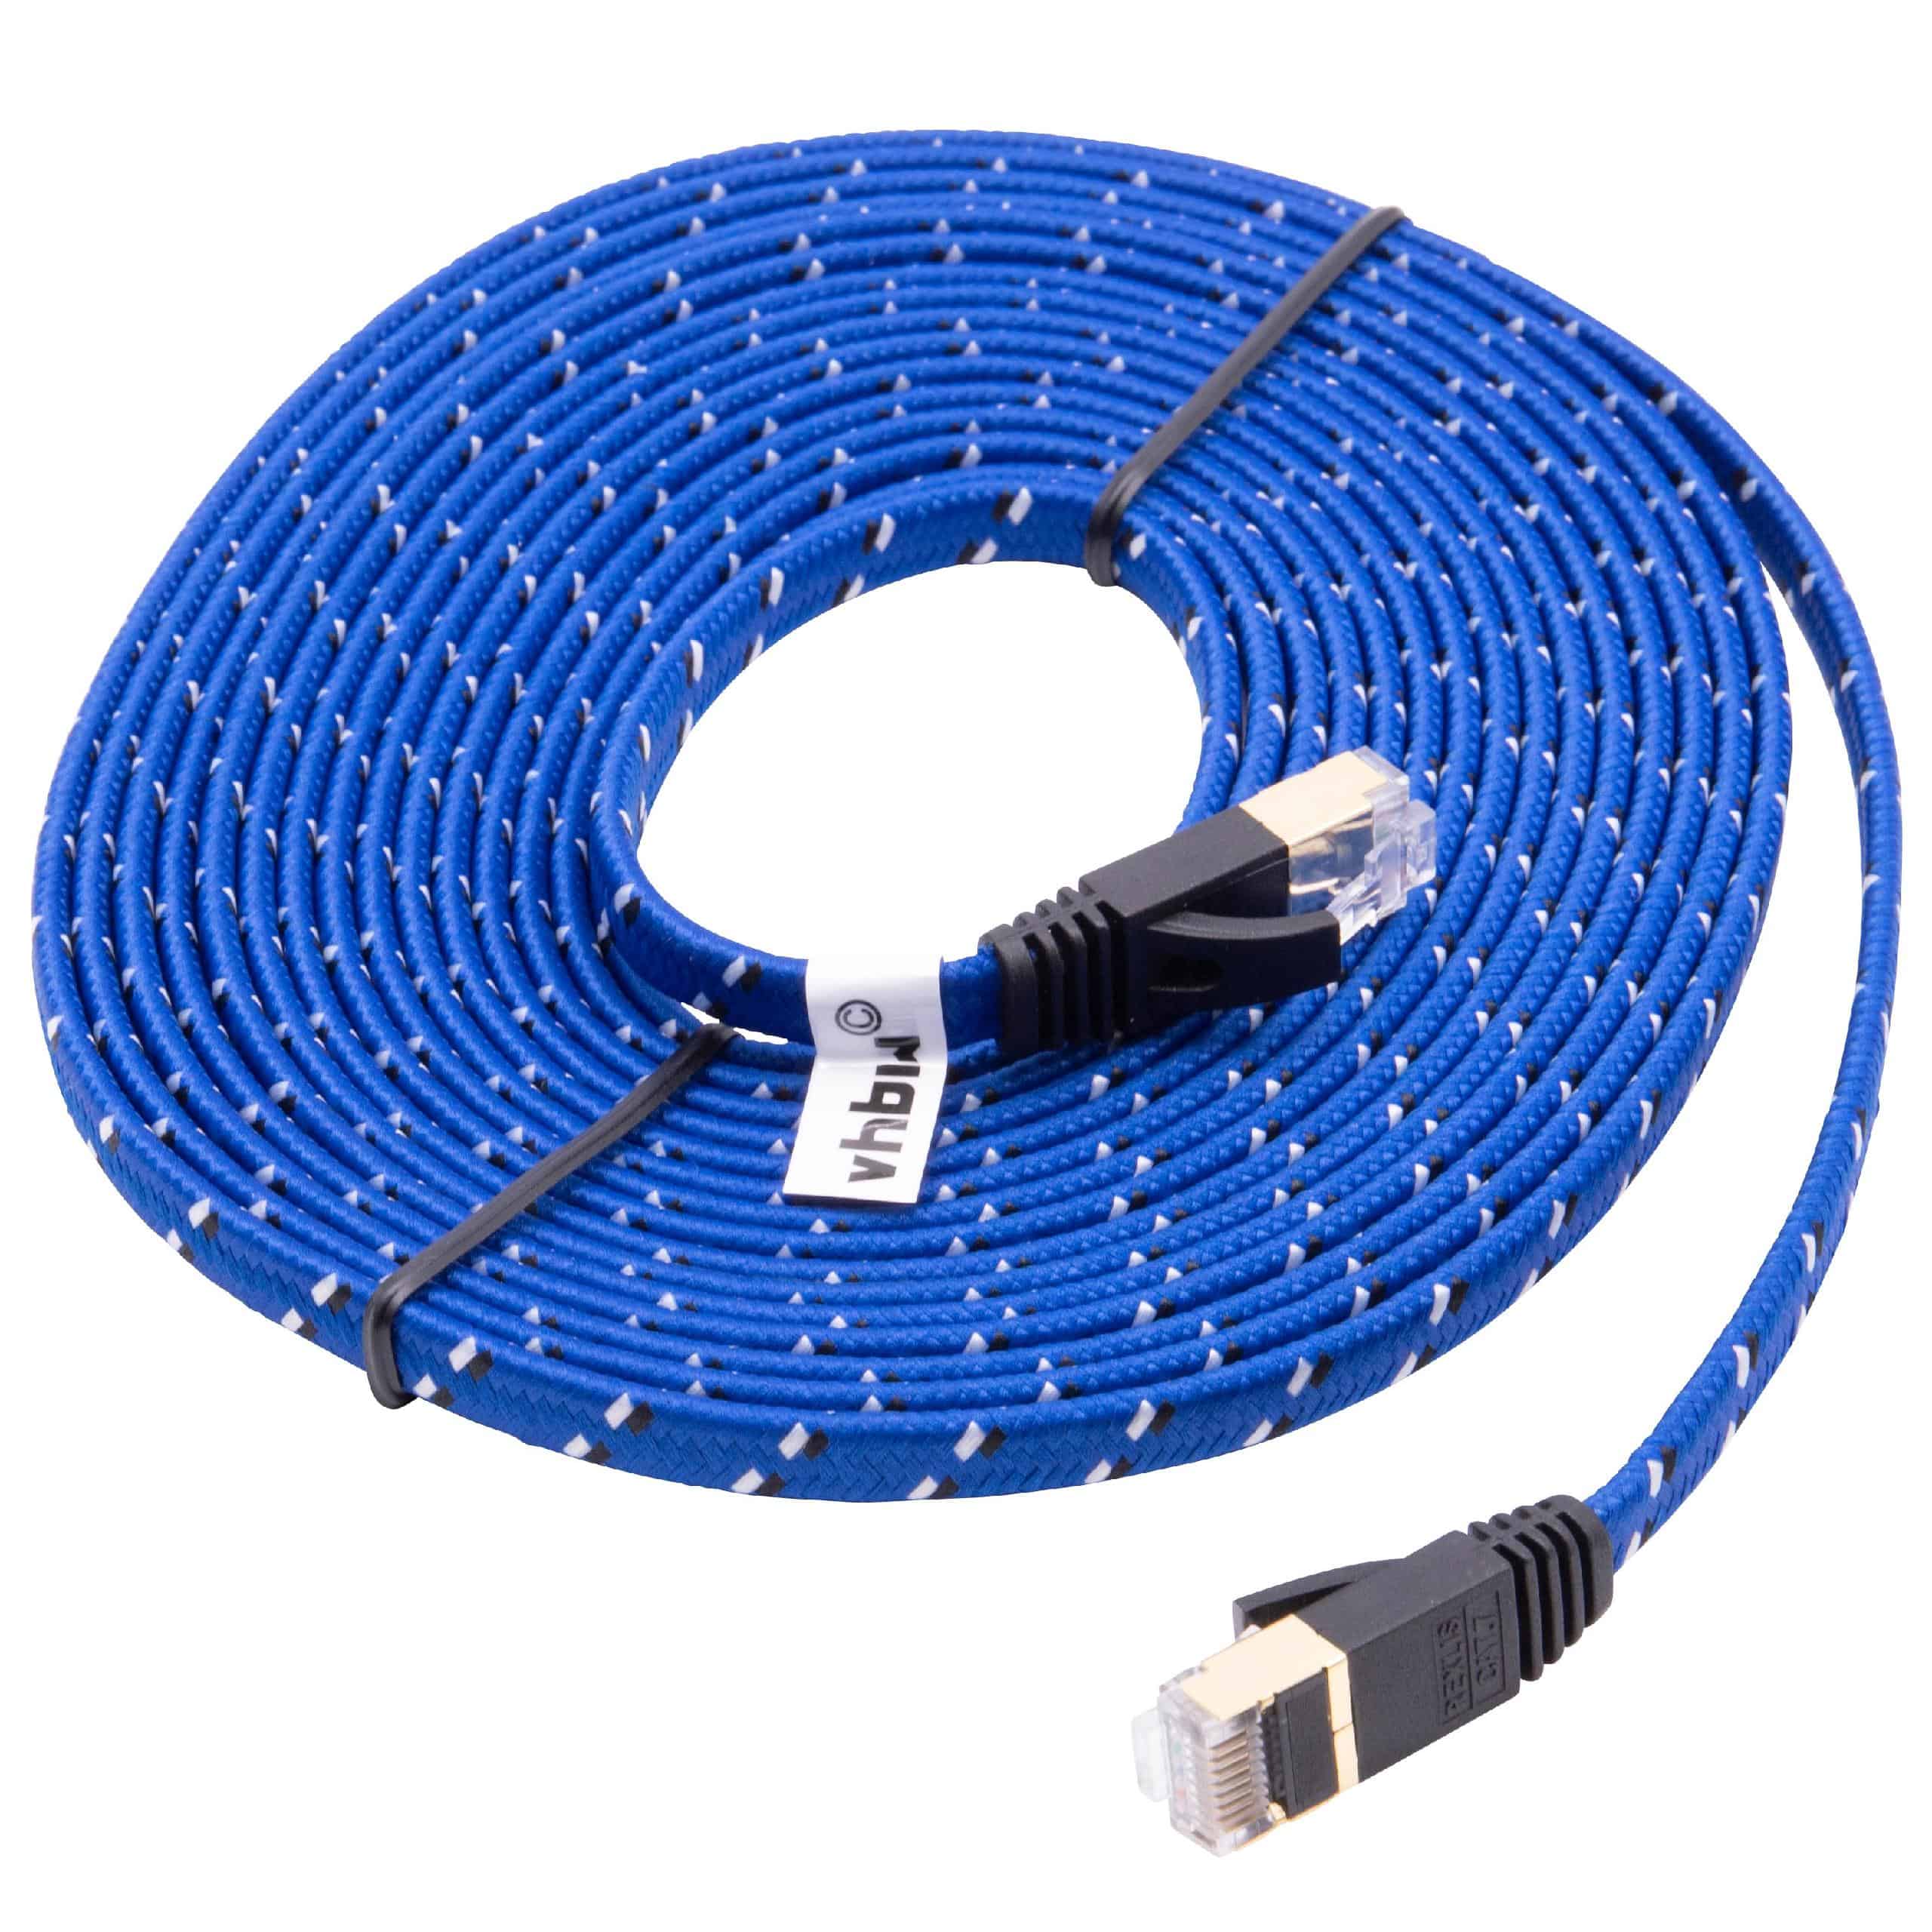 Cavo Ethernet, cavo di rete, cavo LAN, cavo patch Cat7 5m blu - cavo piatto